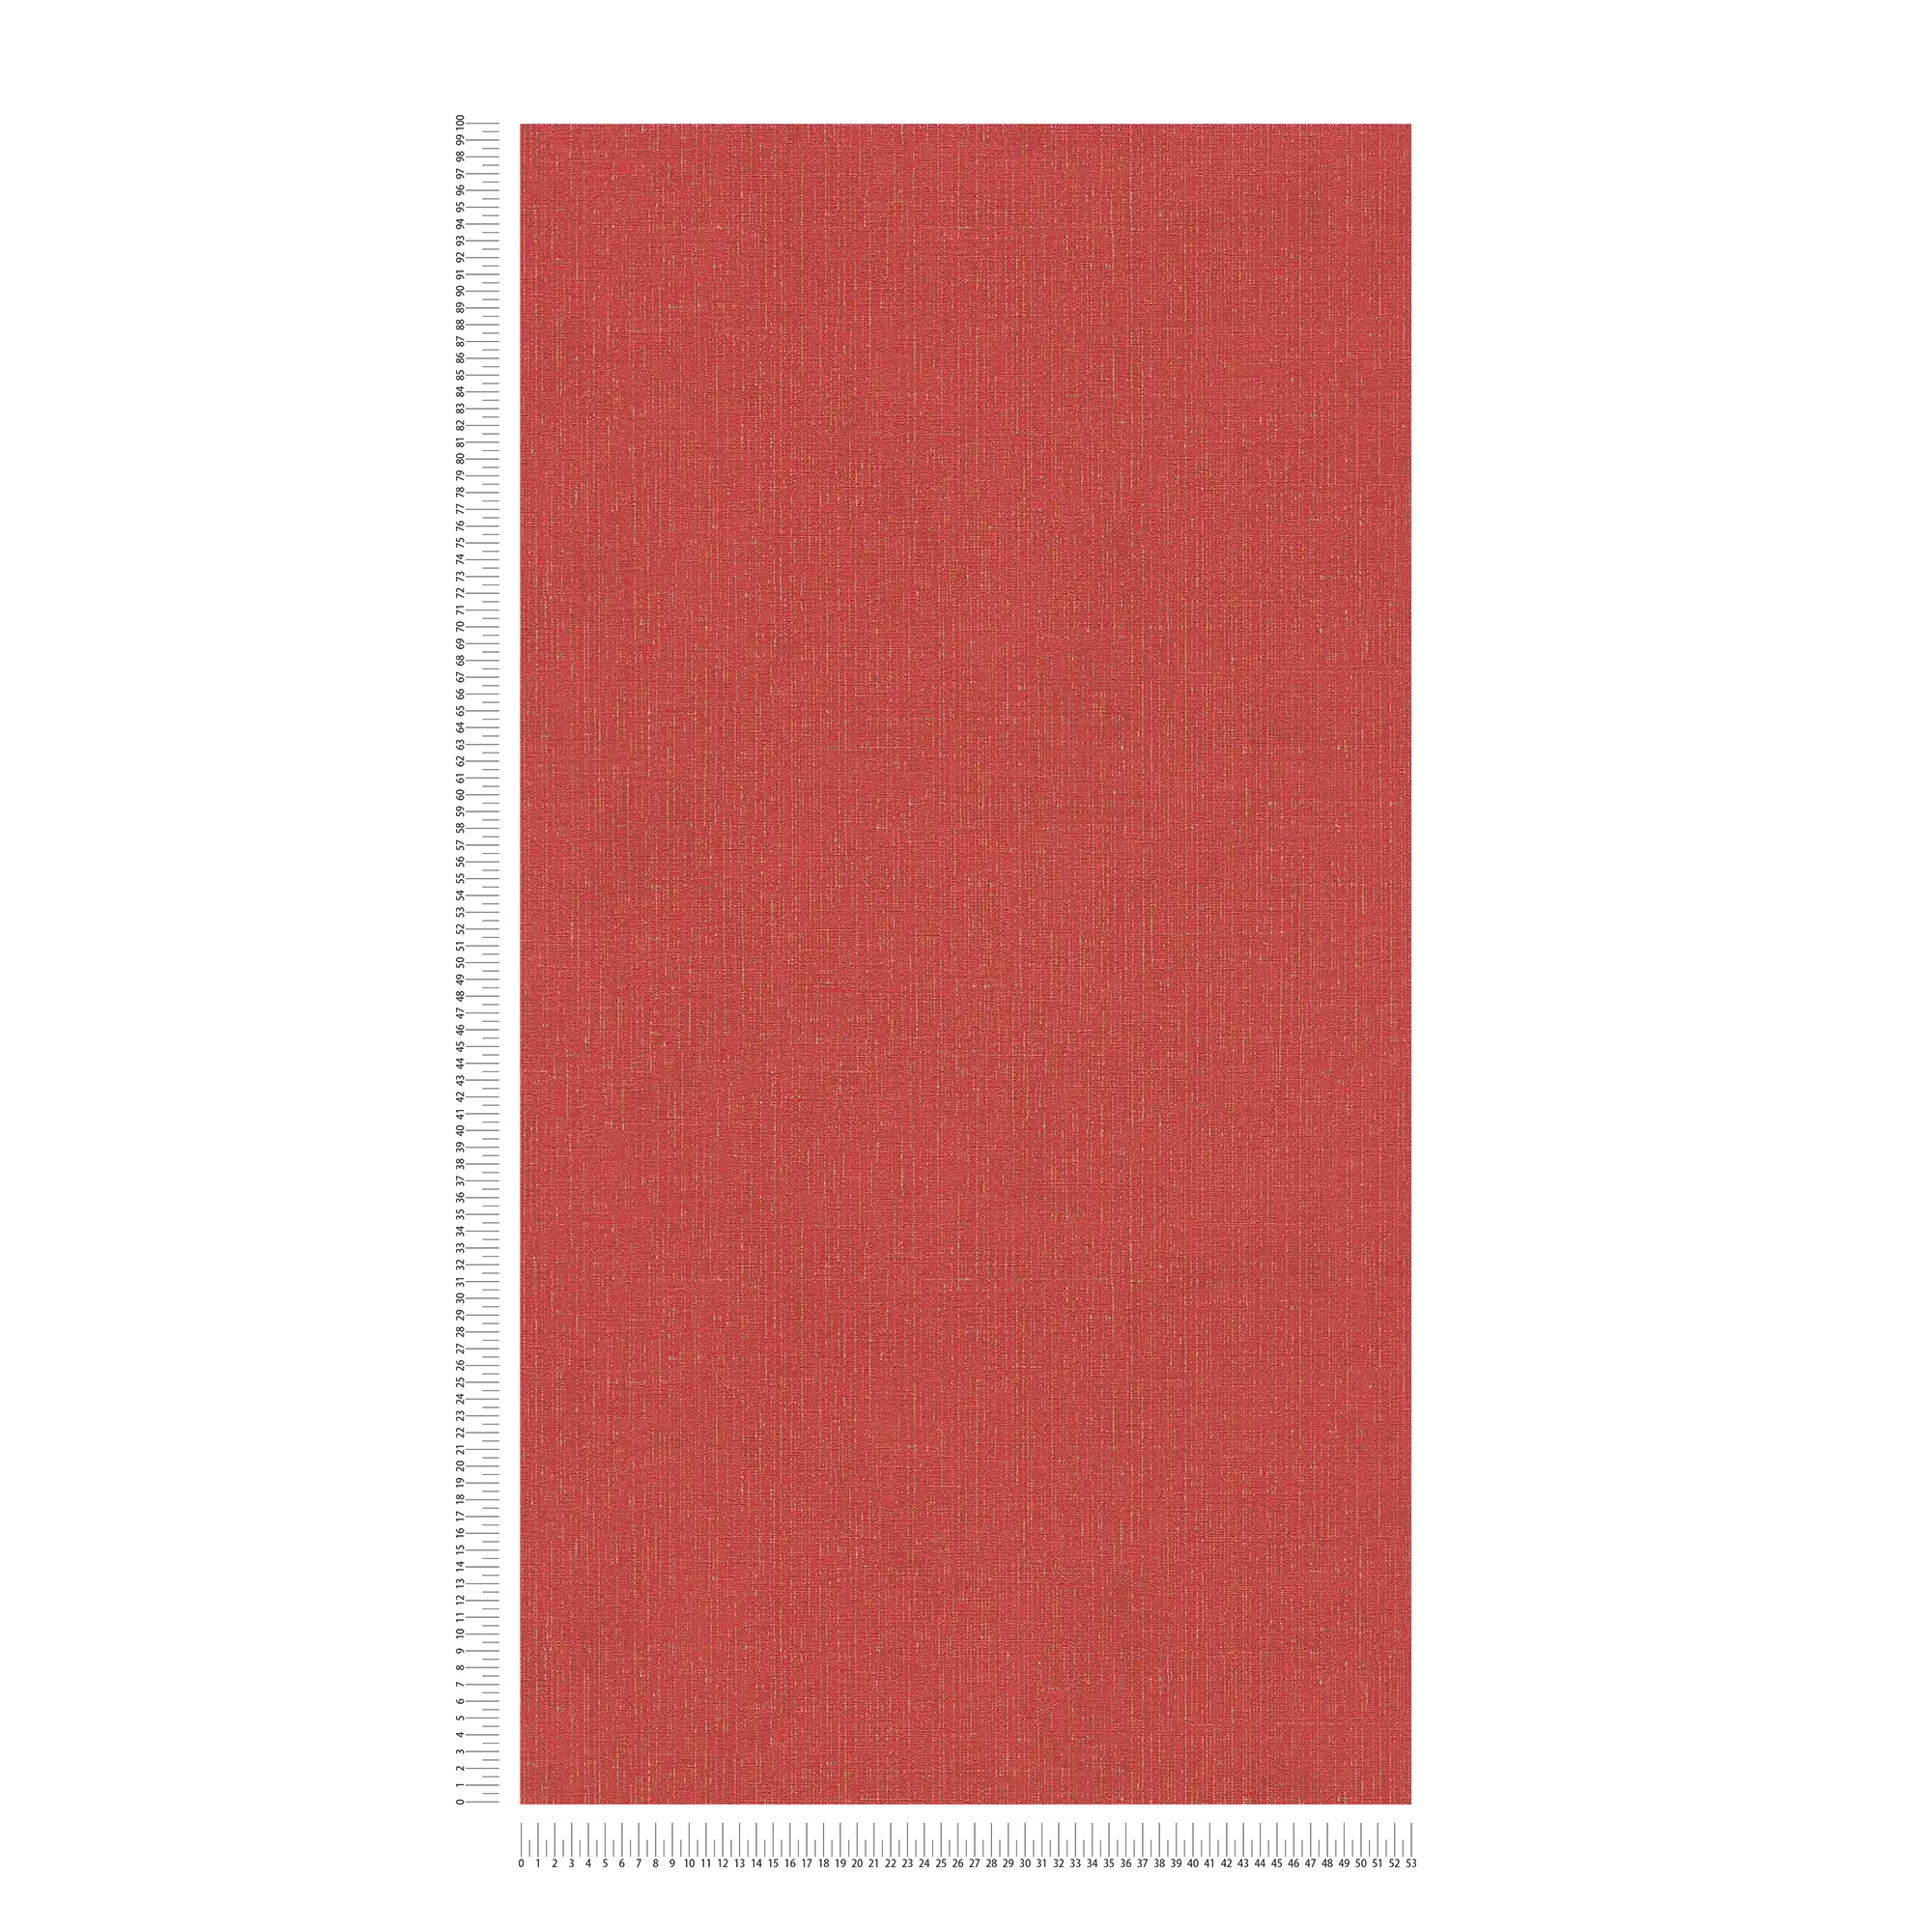             Papel pintado rojo moteado de oro con óptica textil - metálico, rojo
        